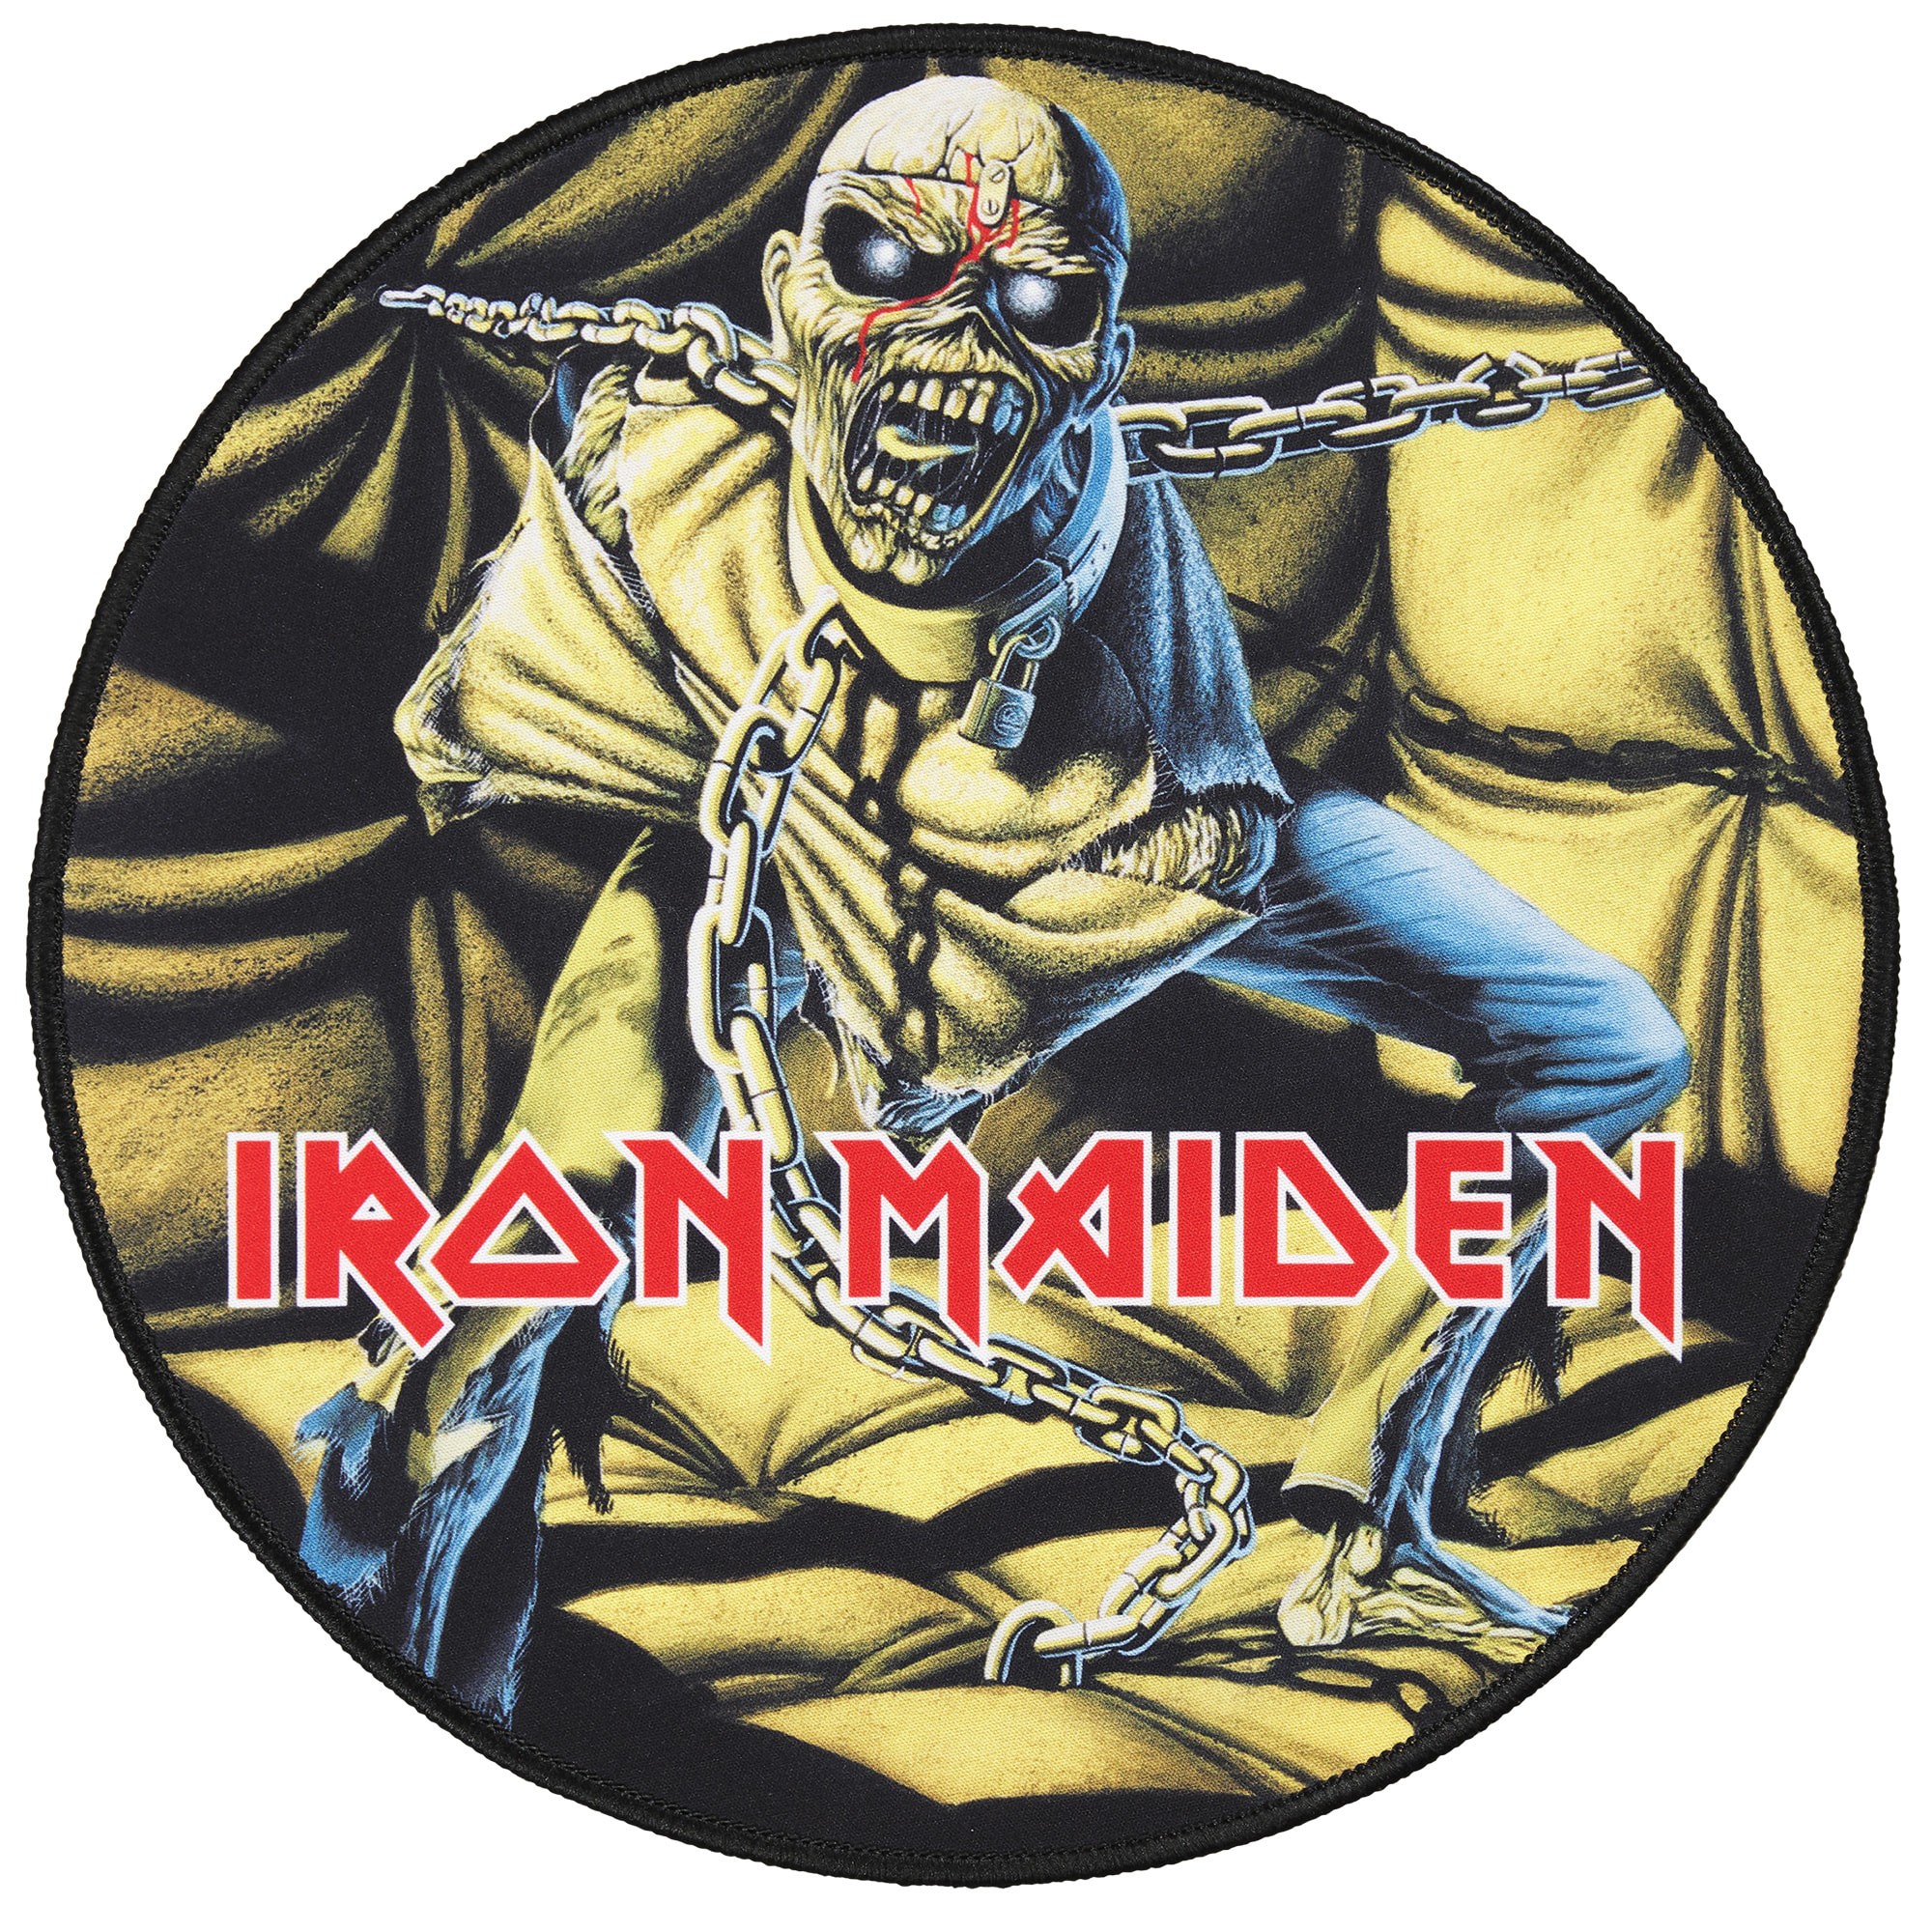 Iron Maiden: Piece of Mind